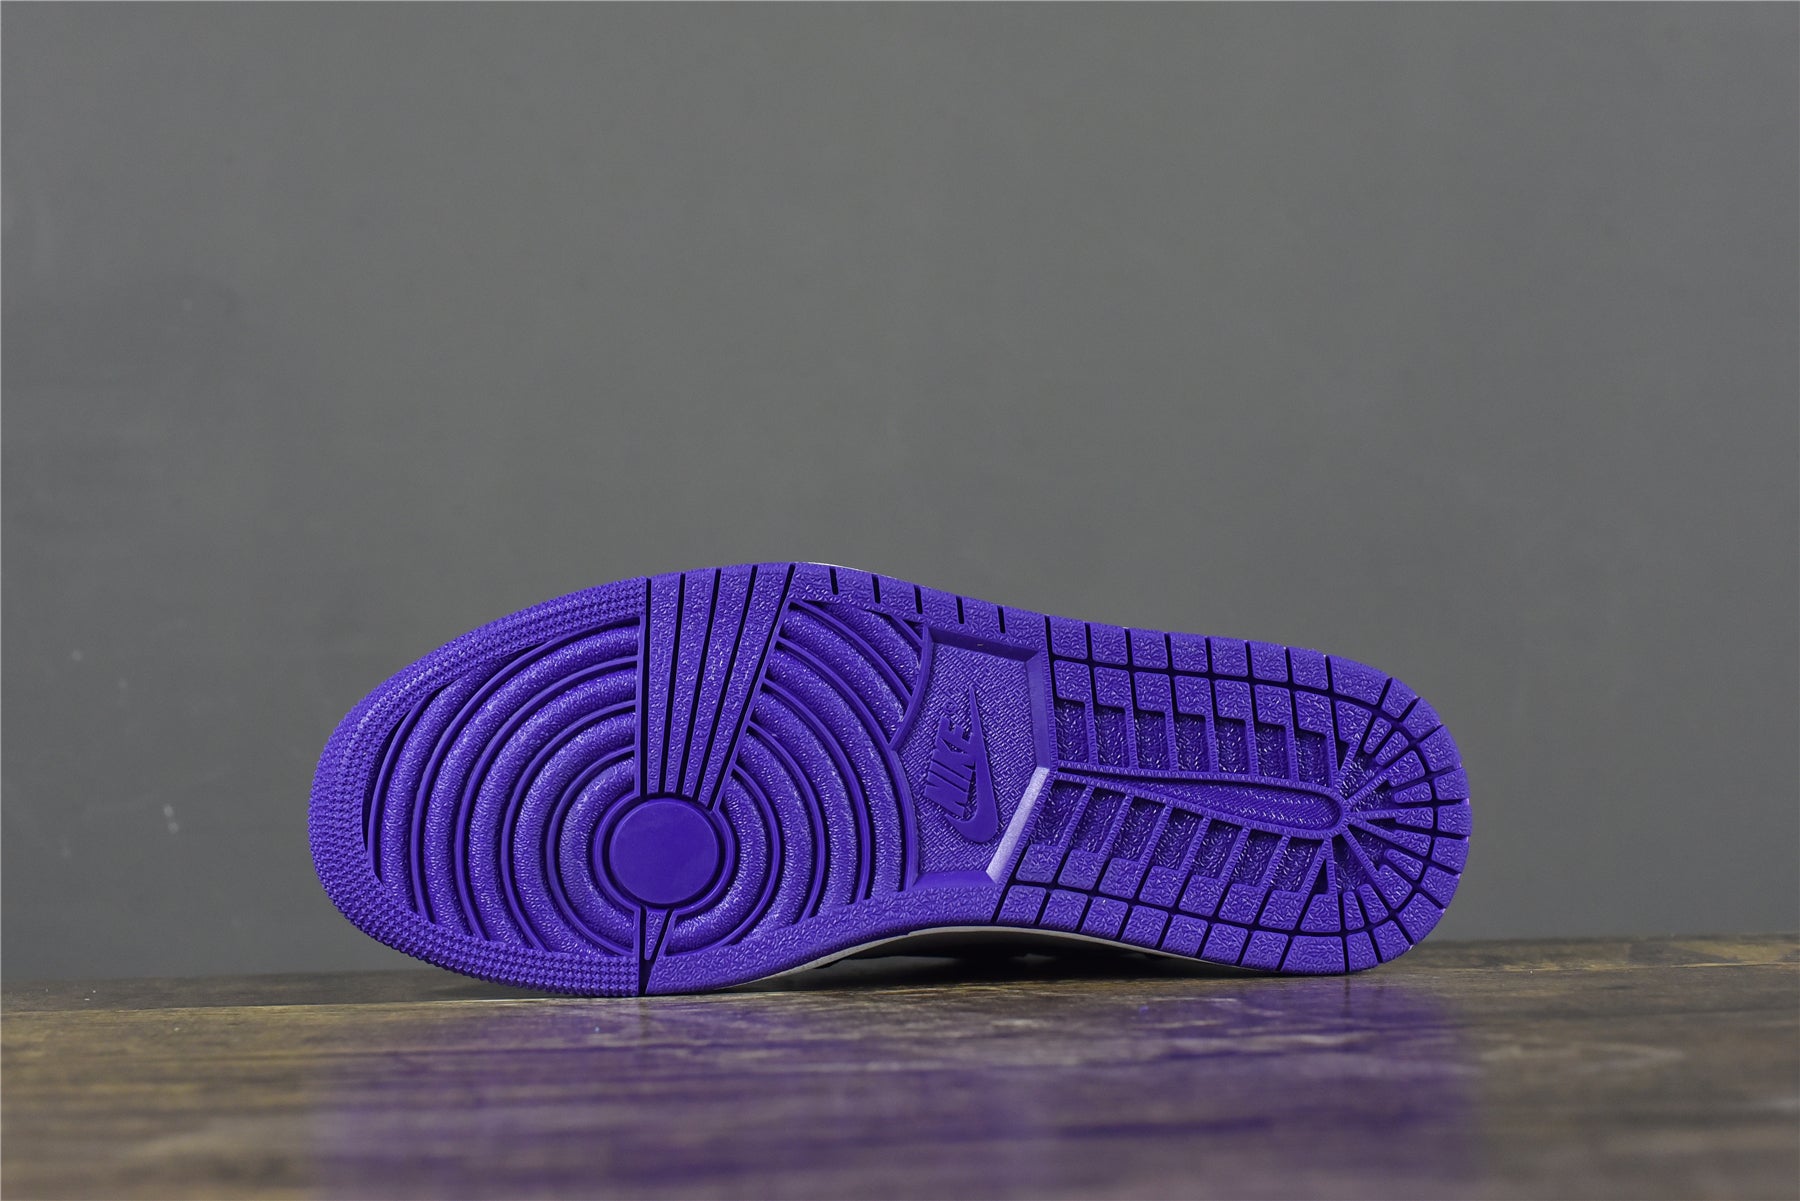 Air Jordan 1 High 'Court Purple 2.0'